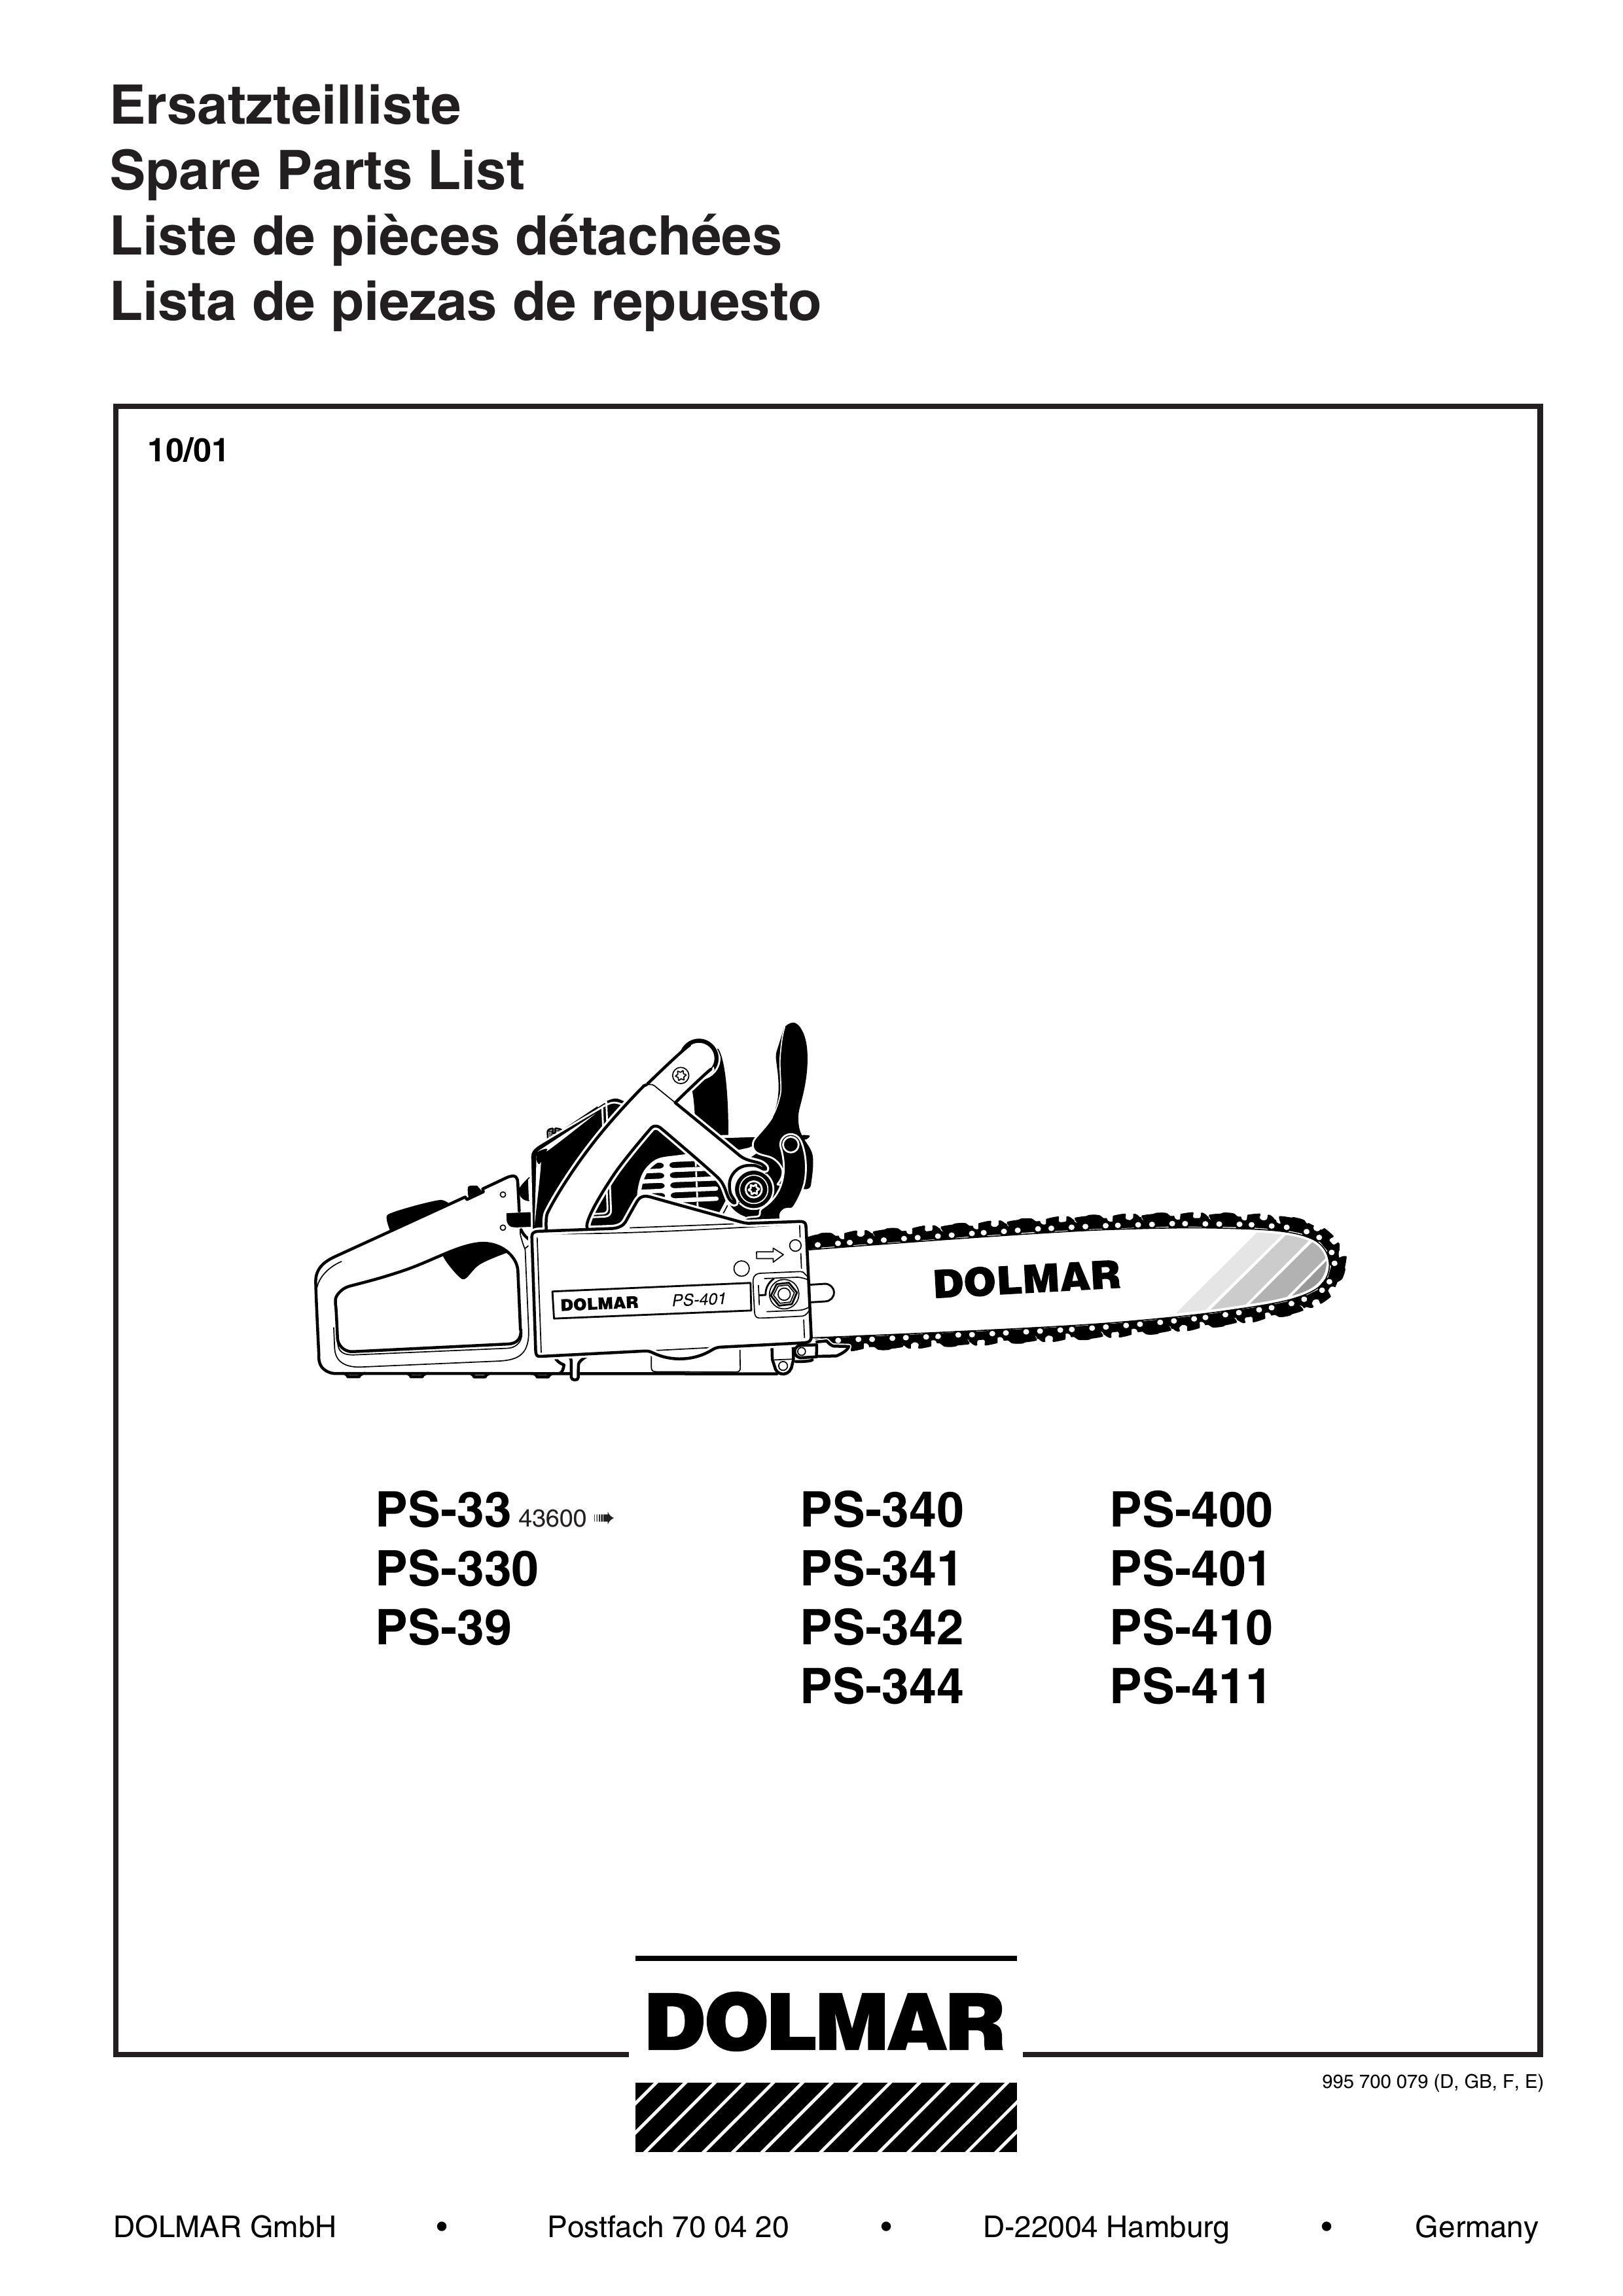 Dolmar PS-410 Chainsaw User Manual